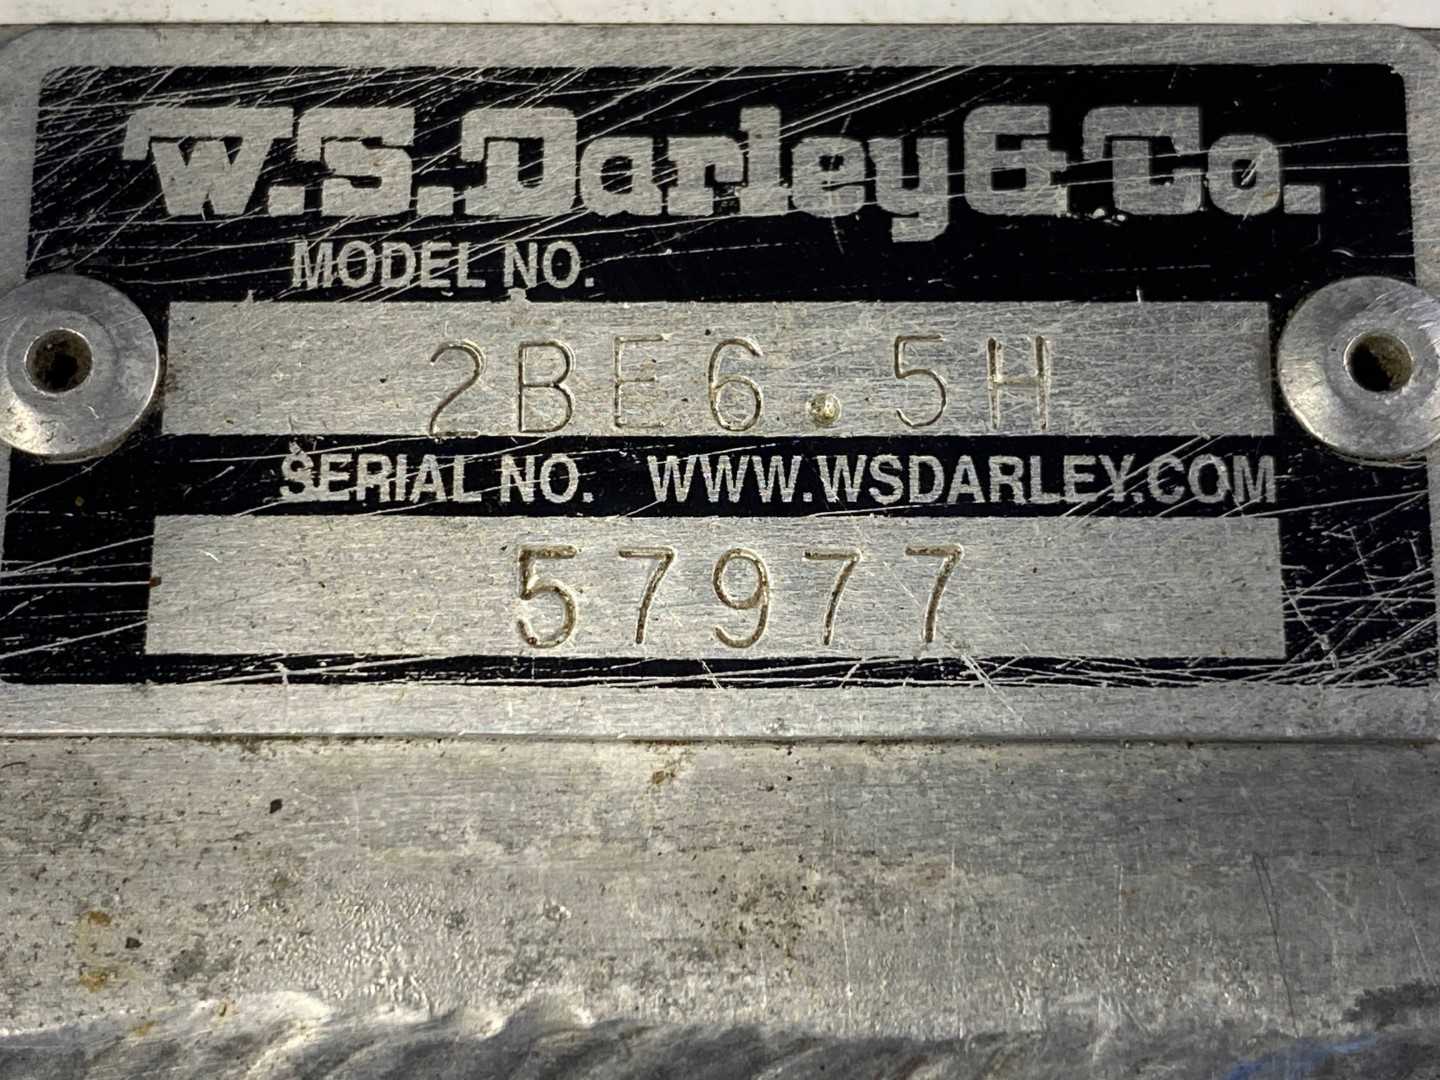 Darley 2BE6.5H CGP6 Portable Marine pump missing fuel tank